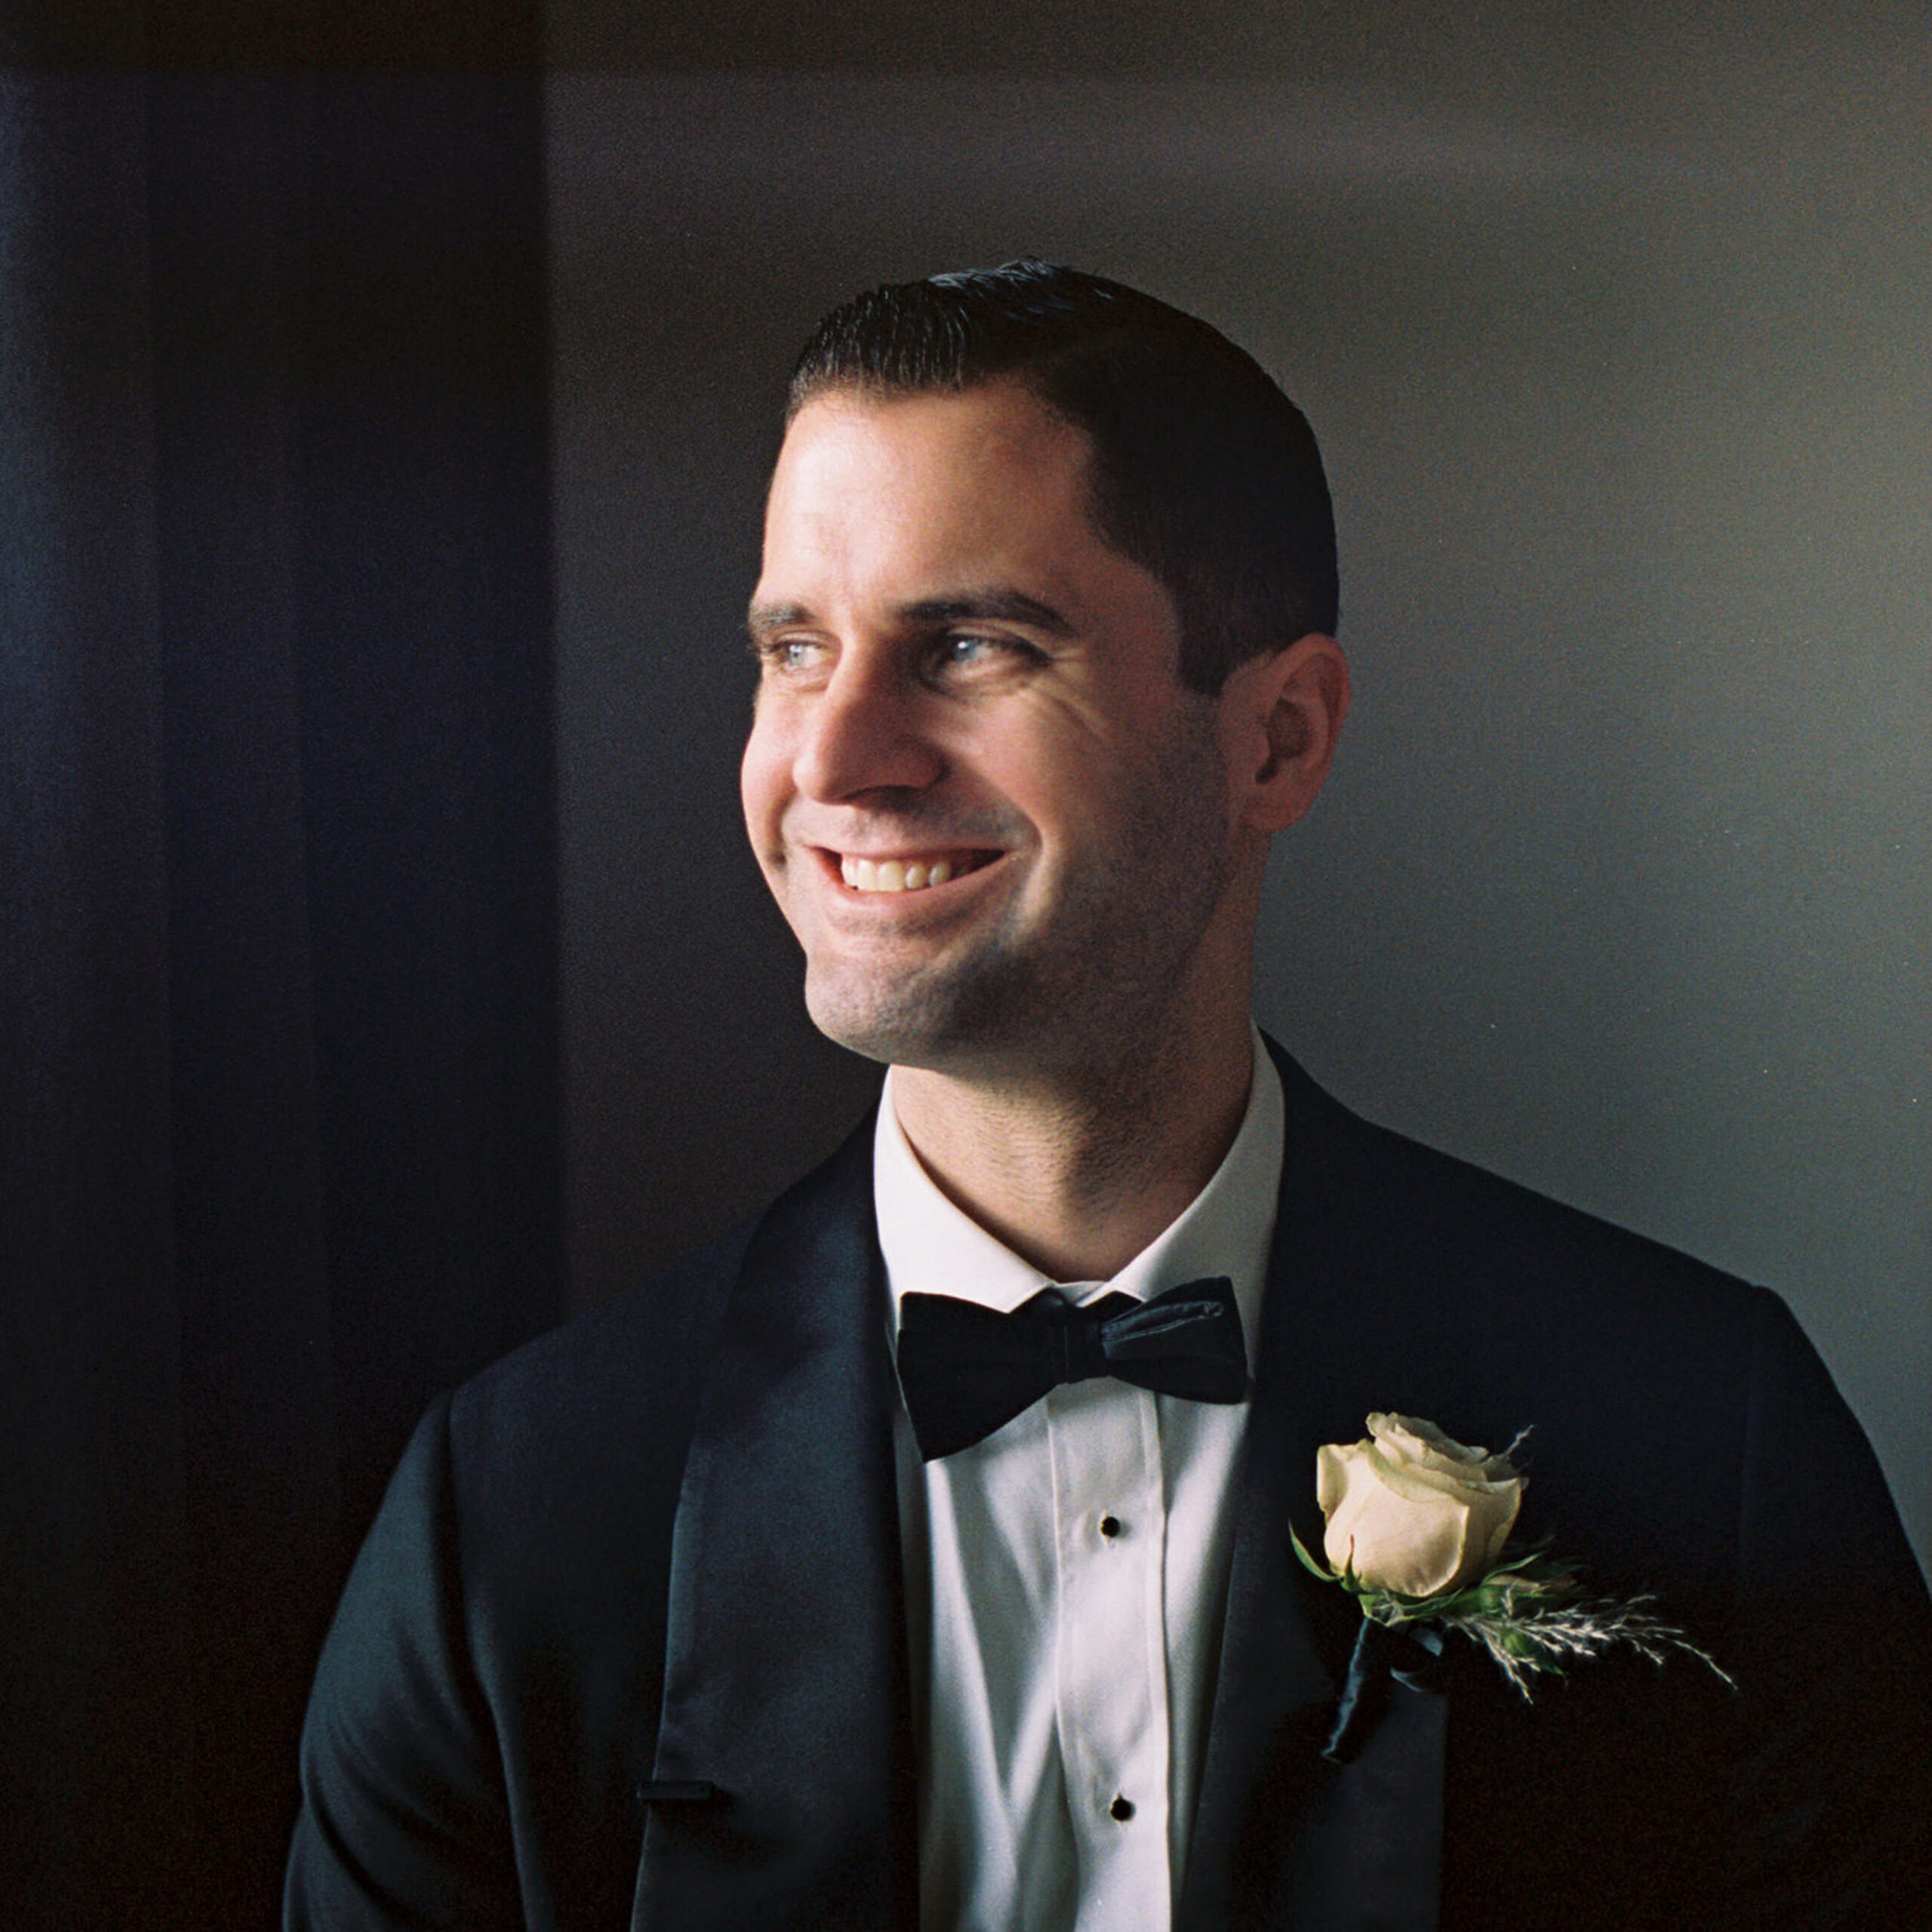 Headshot of the groom. Film wedding photography image by Jenny Fu Studio